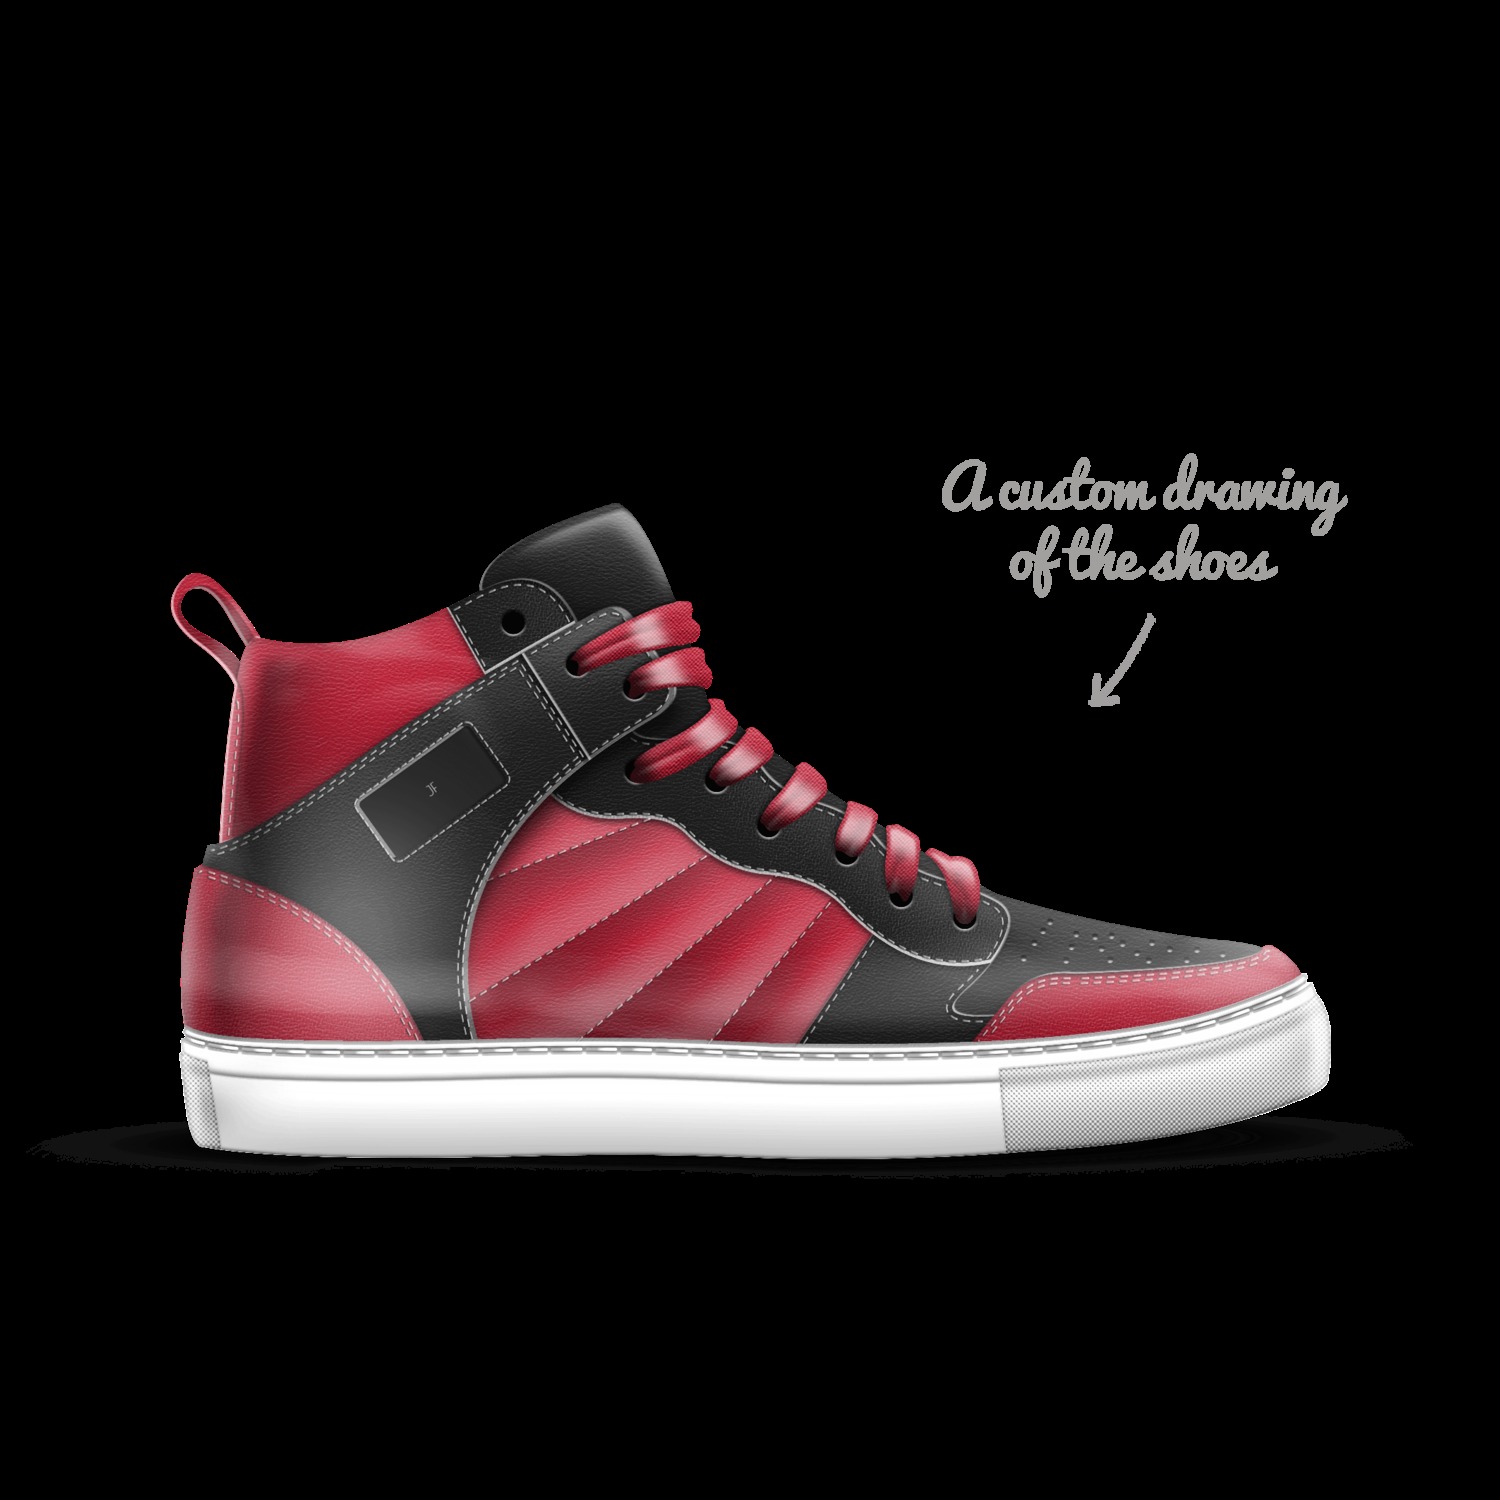 JFs | A Custom Shoe concept by Kyrie Irving